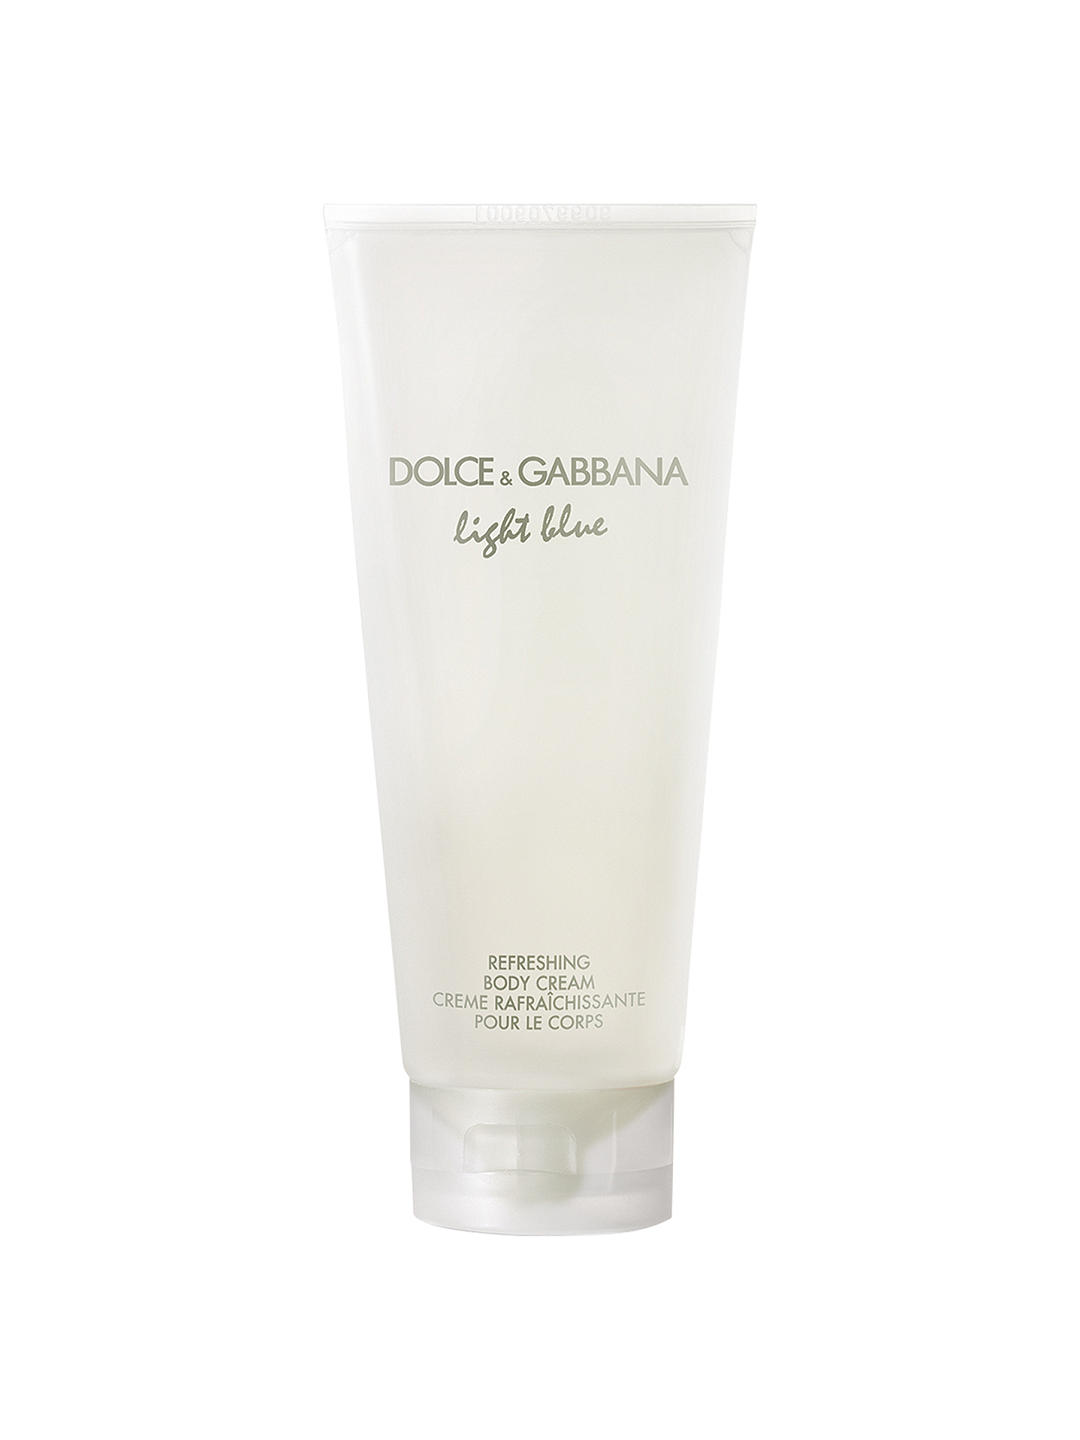 Dolce & Gabbana Light Blue Refreshing Body Cream, 200ml 1